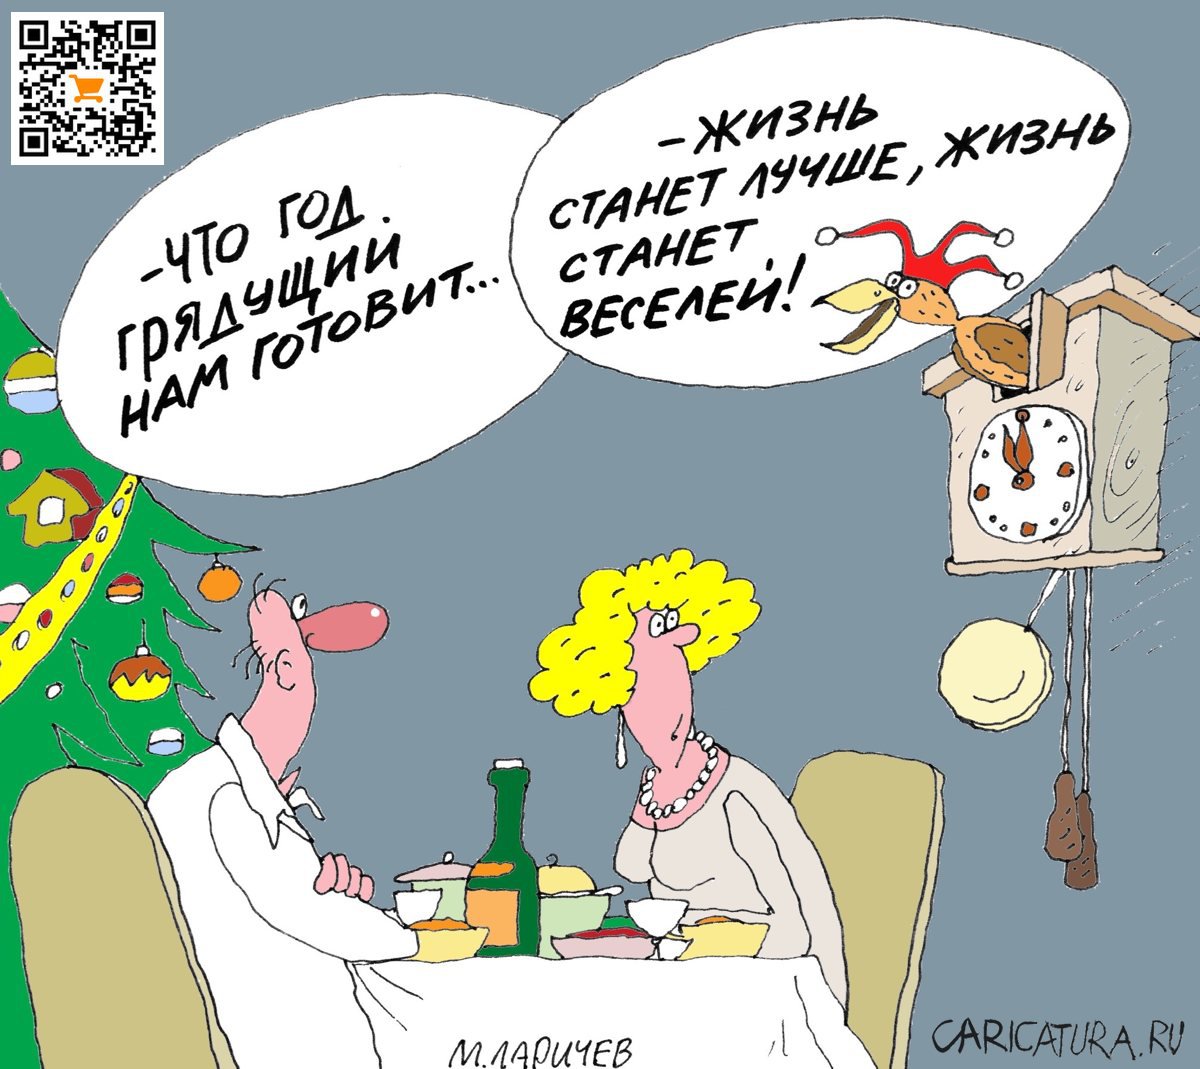 Карикатура "Нострадамус", Михаил Ларичев